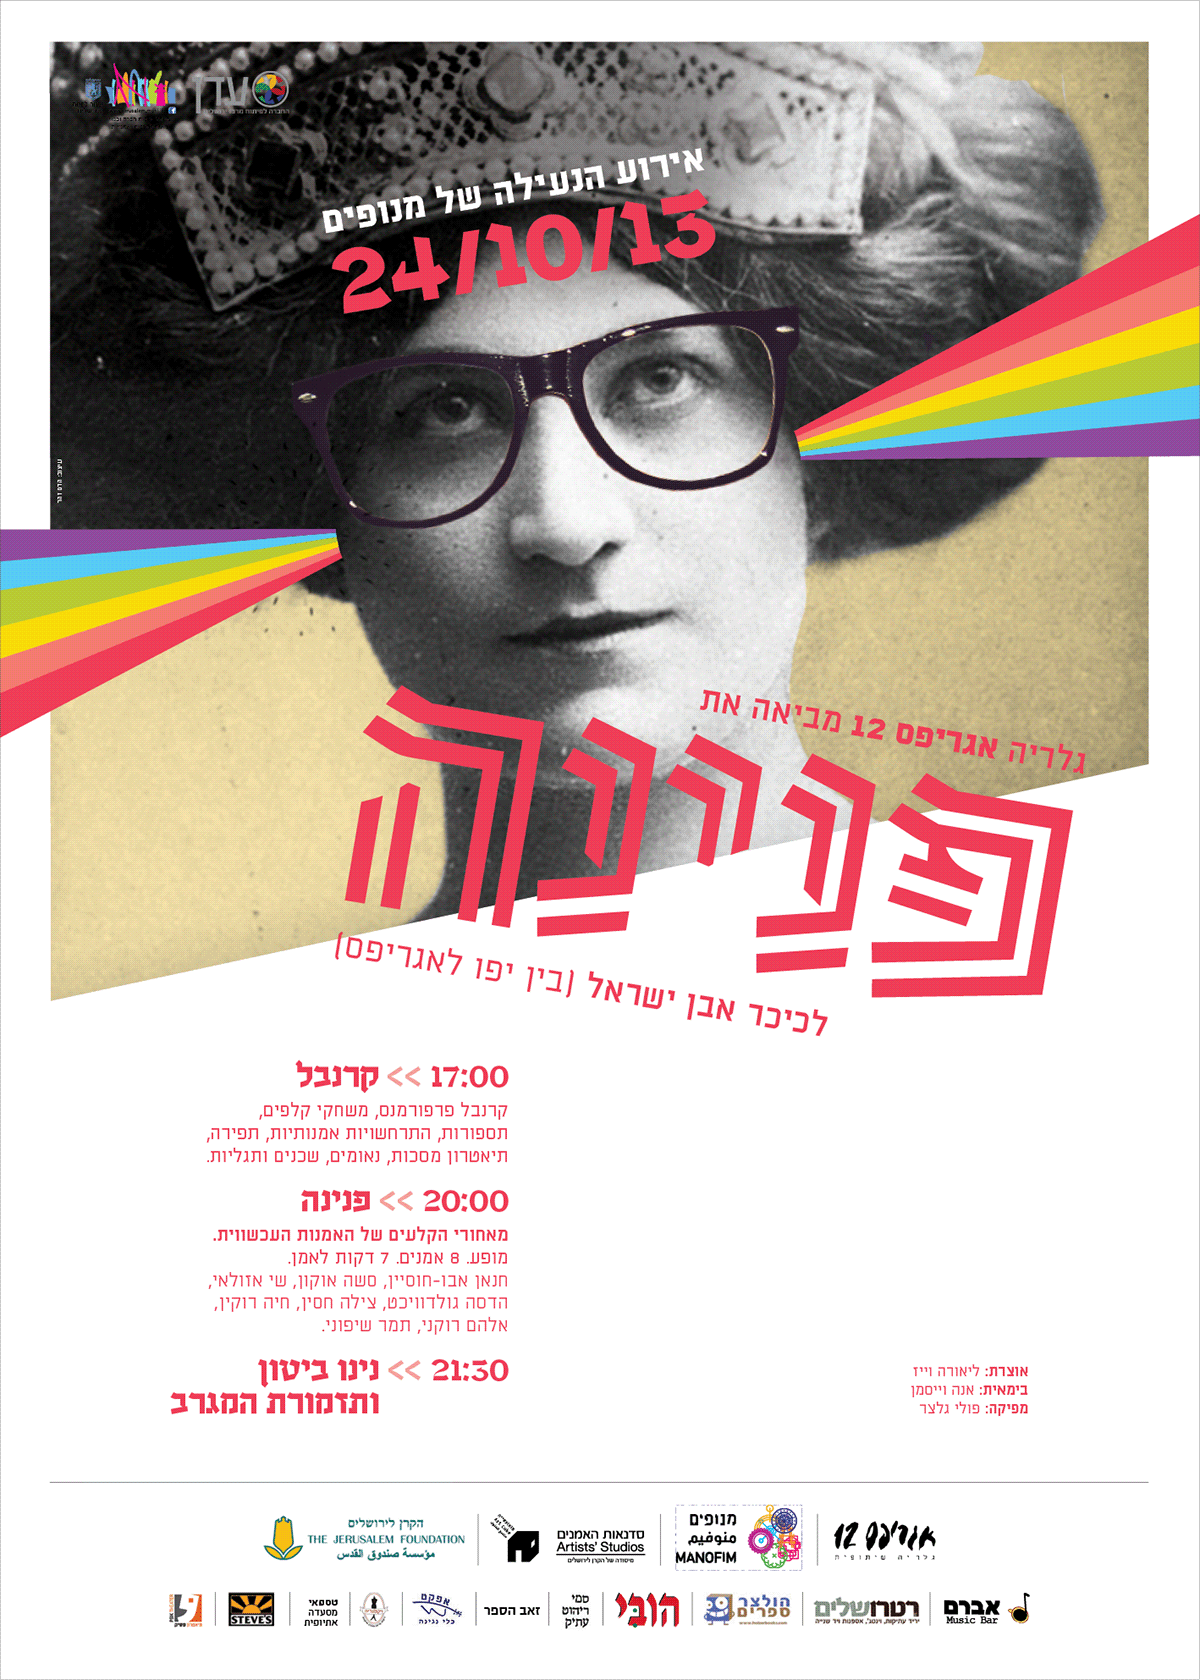 hadas zohar print poster posters color culture Events hebrew preformance festival Invitation israel protest Exhibition 